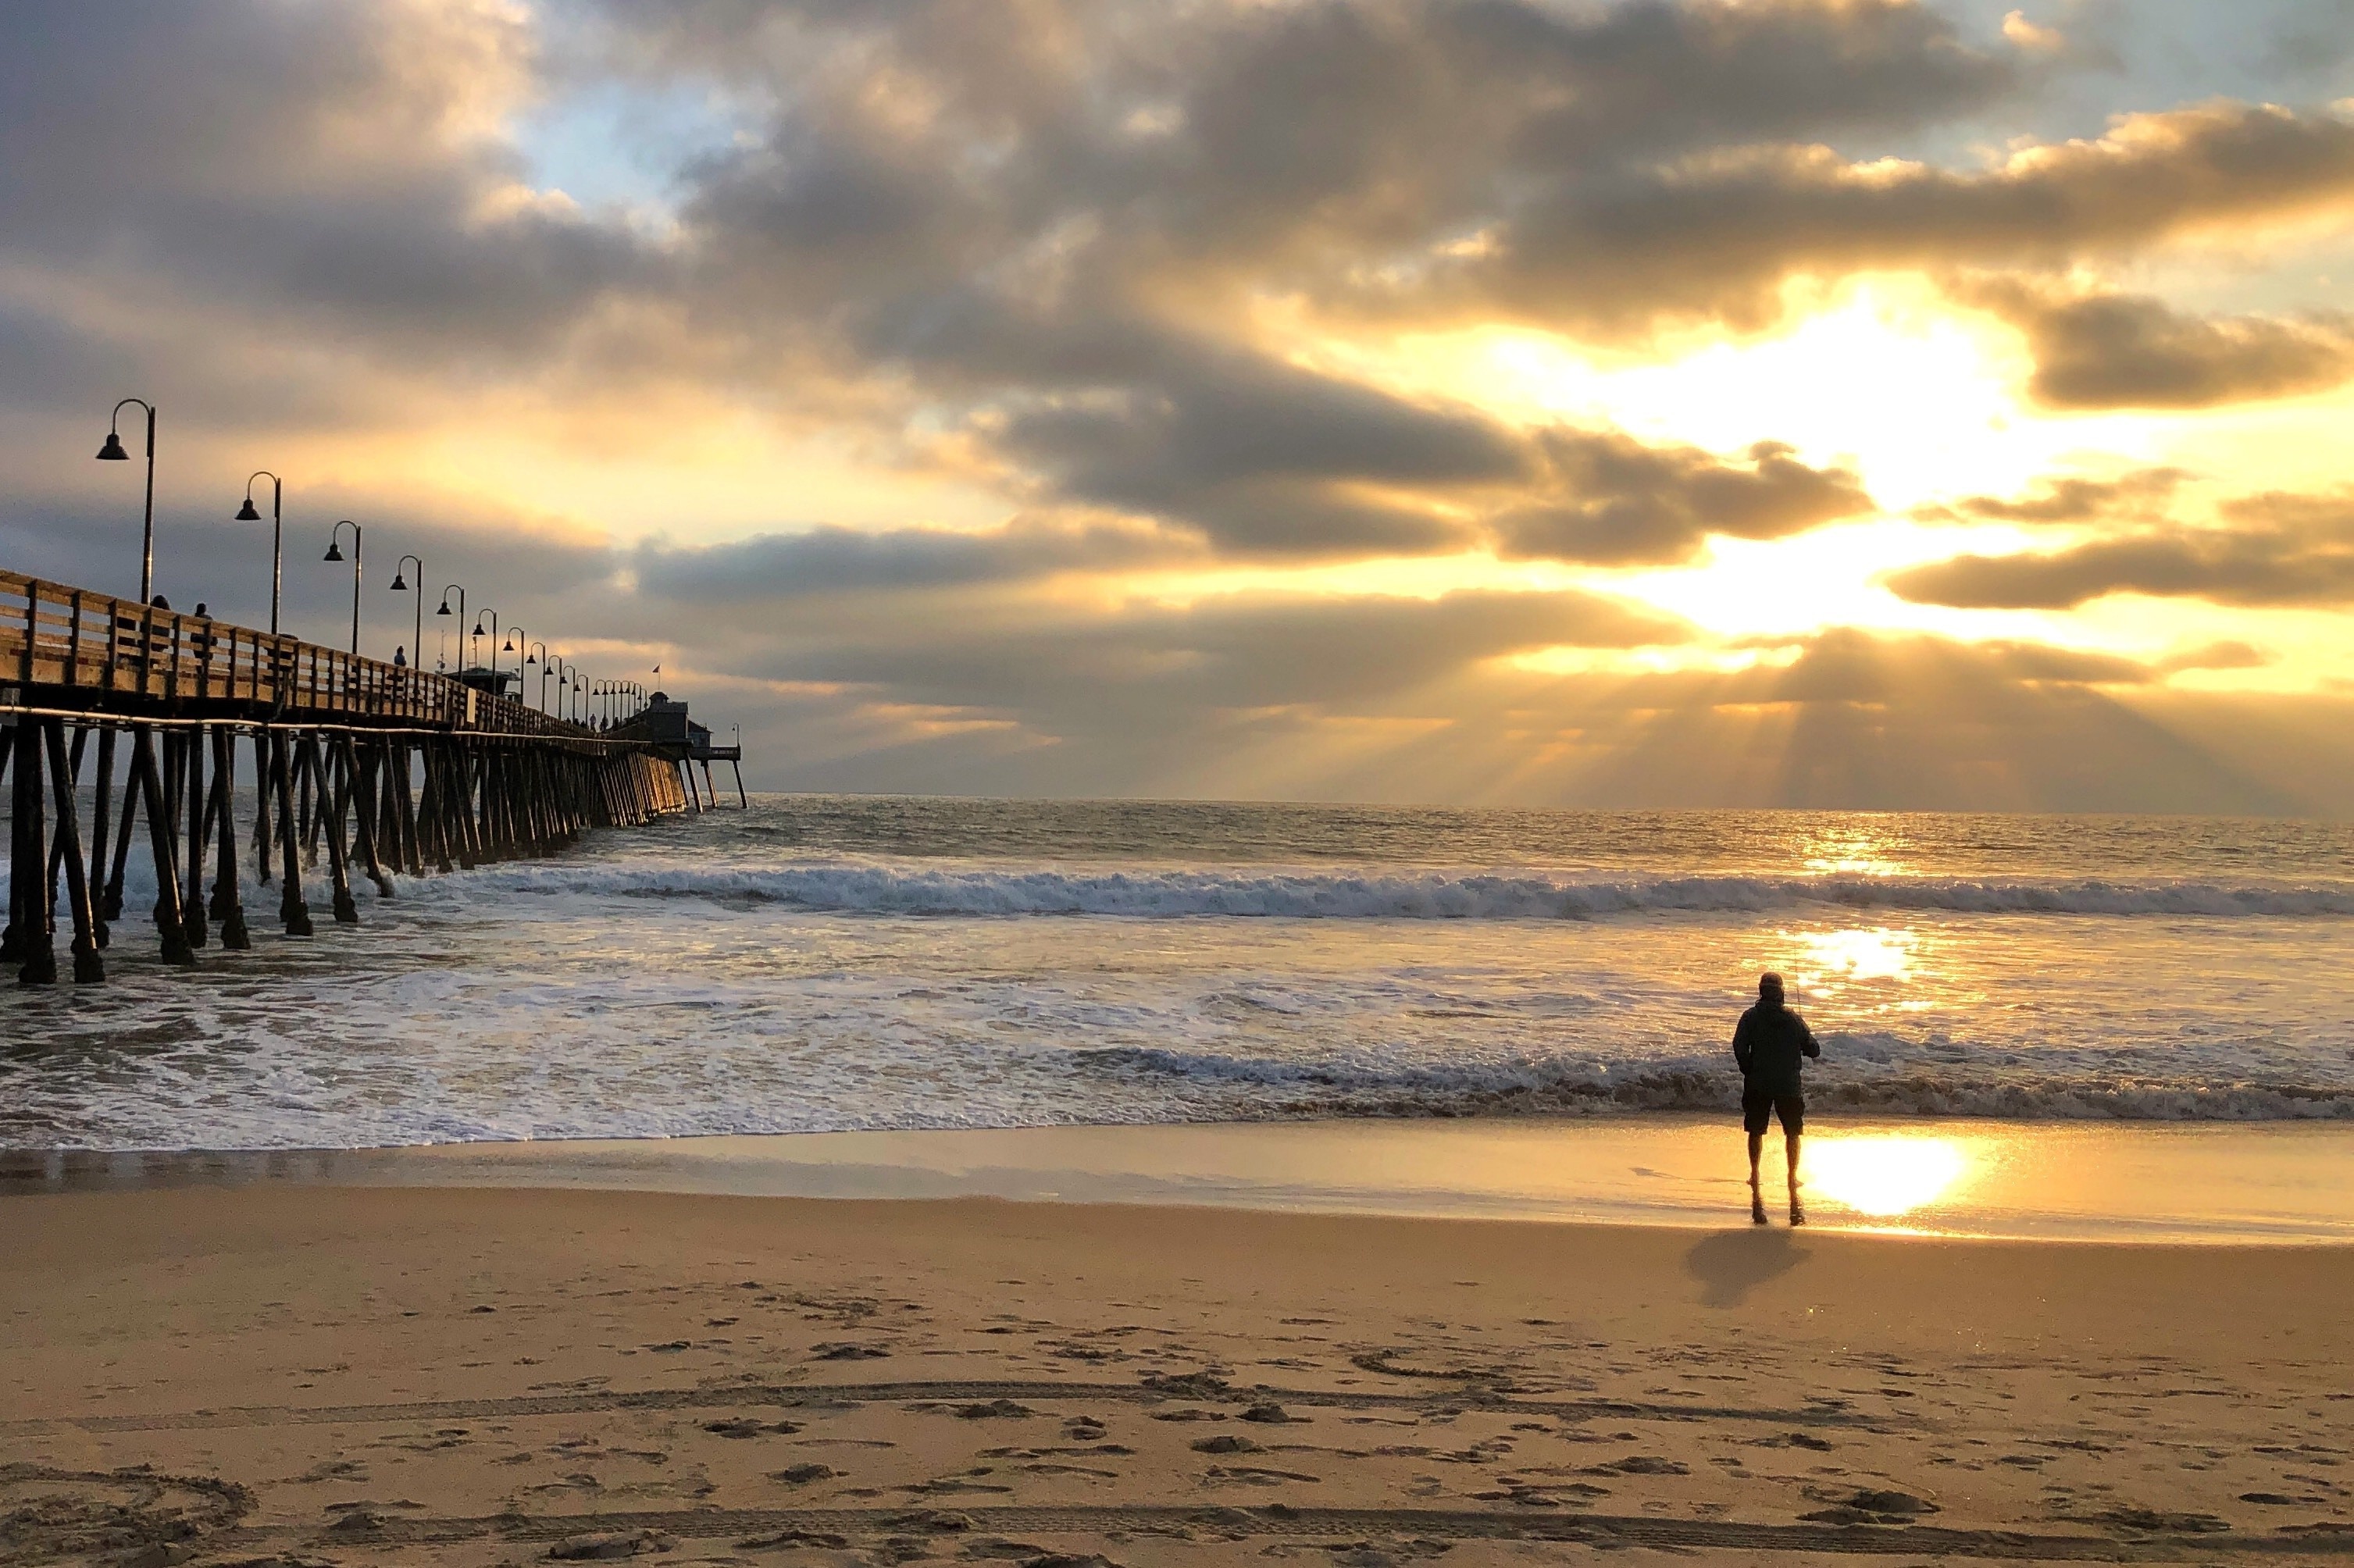 Visit Imperial Beach: 2022 Travel Guide for Imperial Beach, California